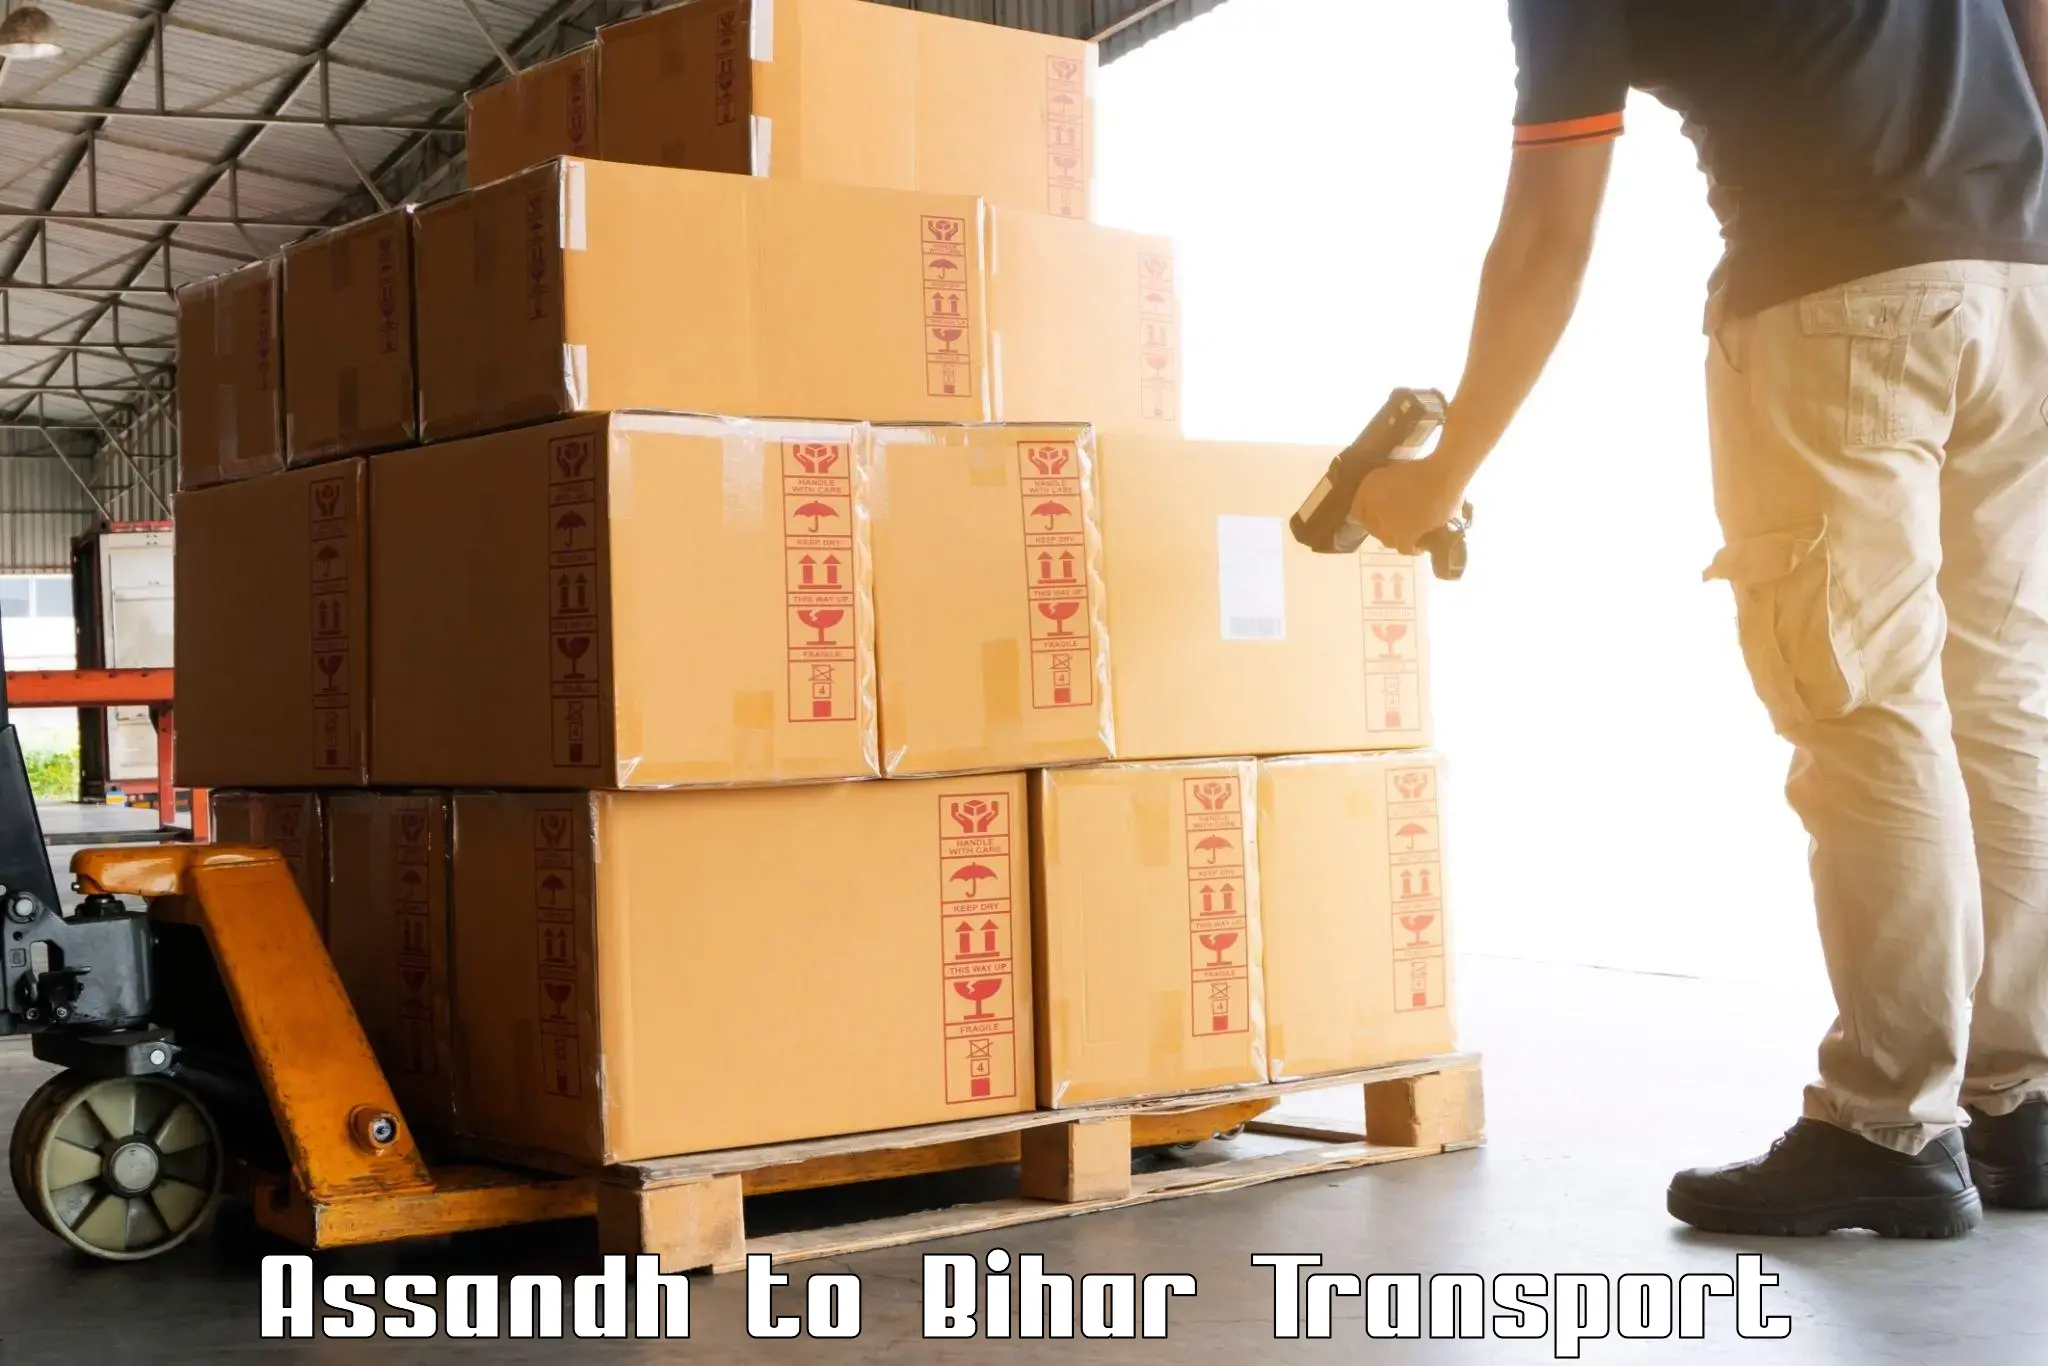 Daily transport service Assandh to Bihar